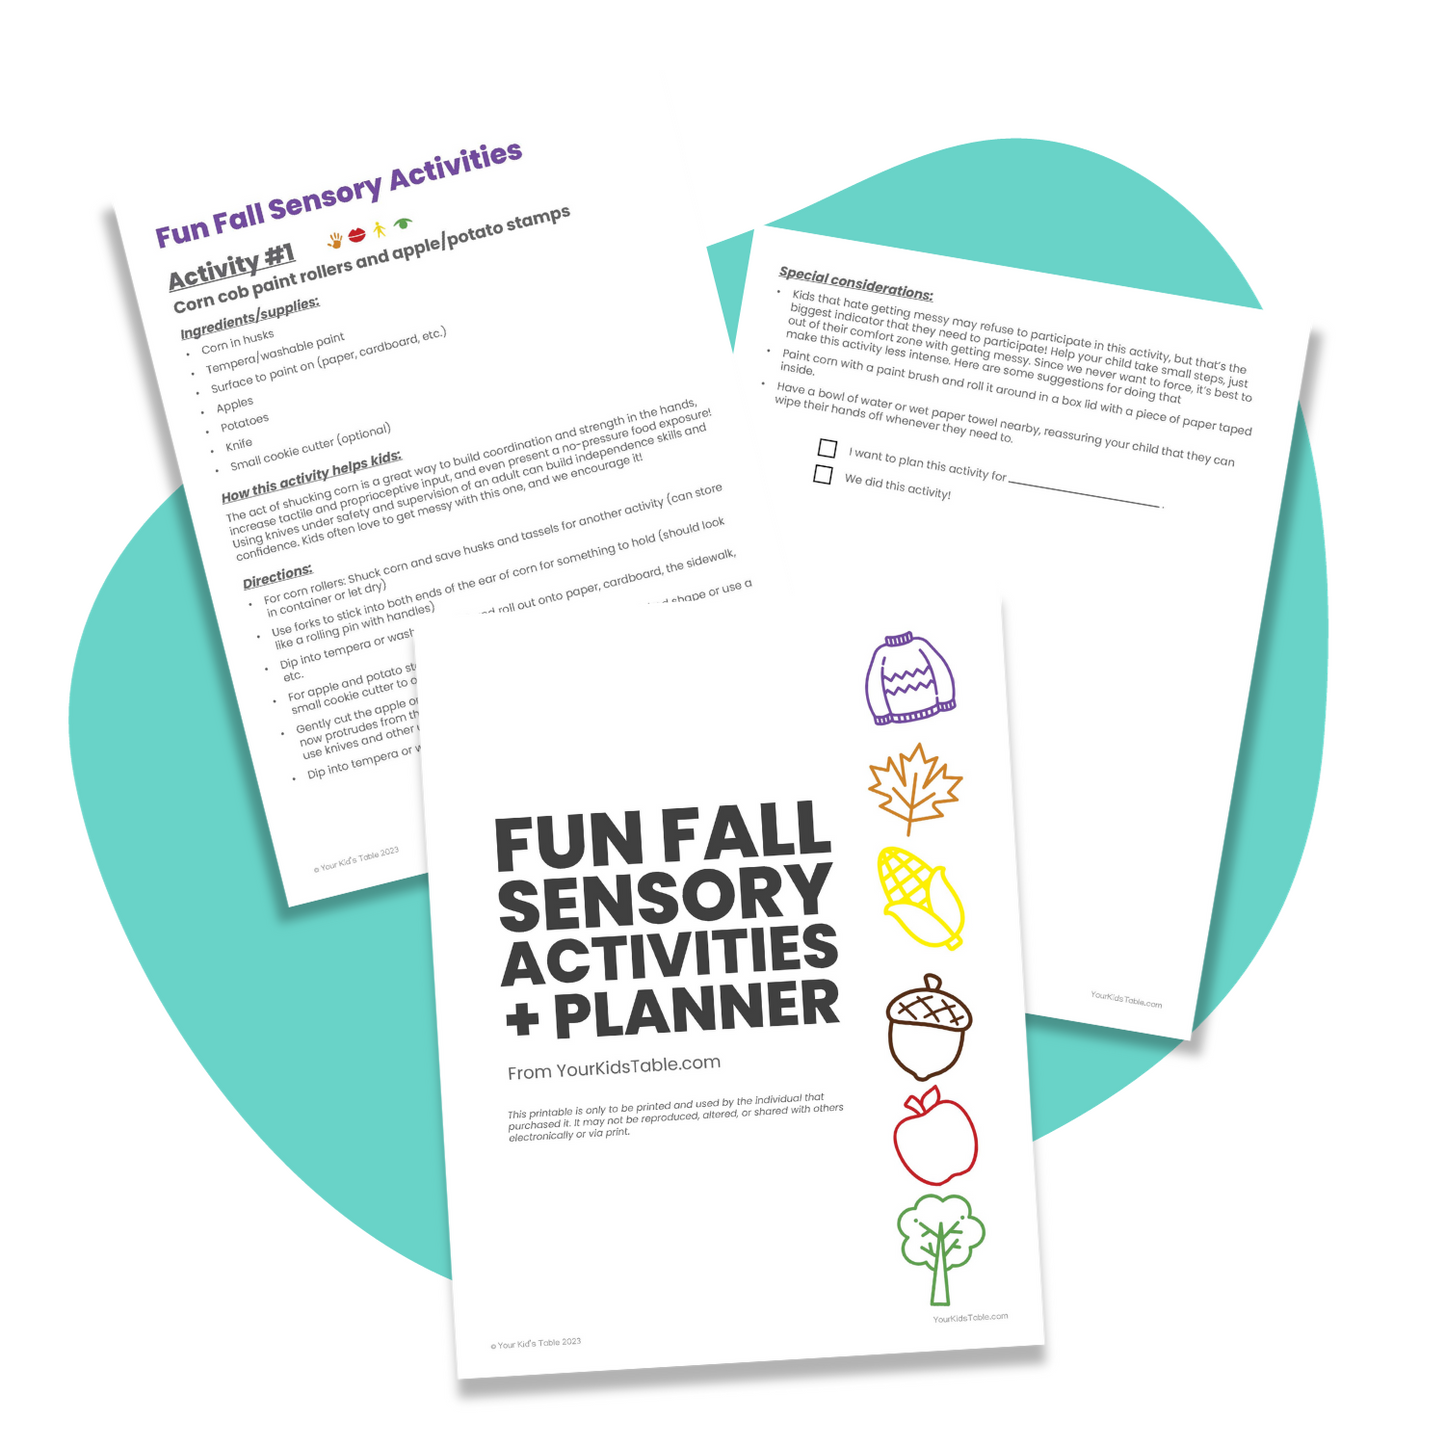 Fun Fall Sensory Activities + Planner